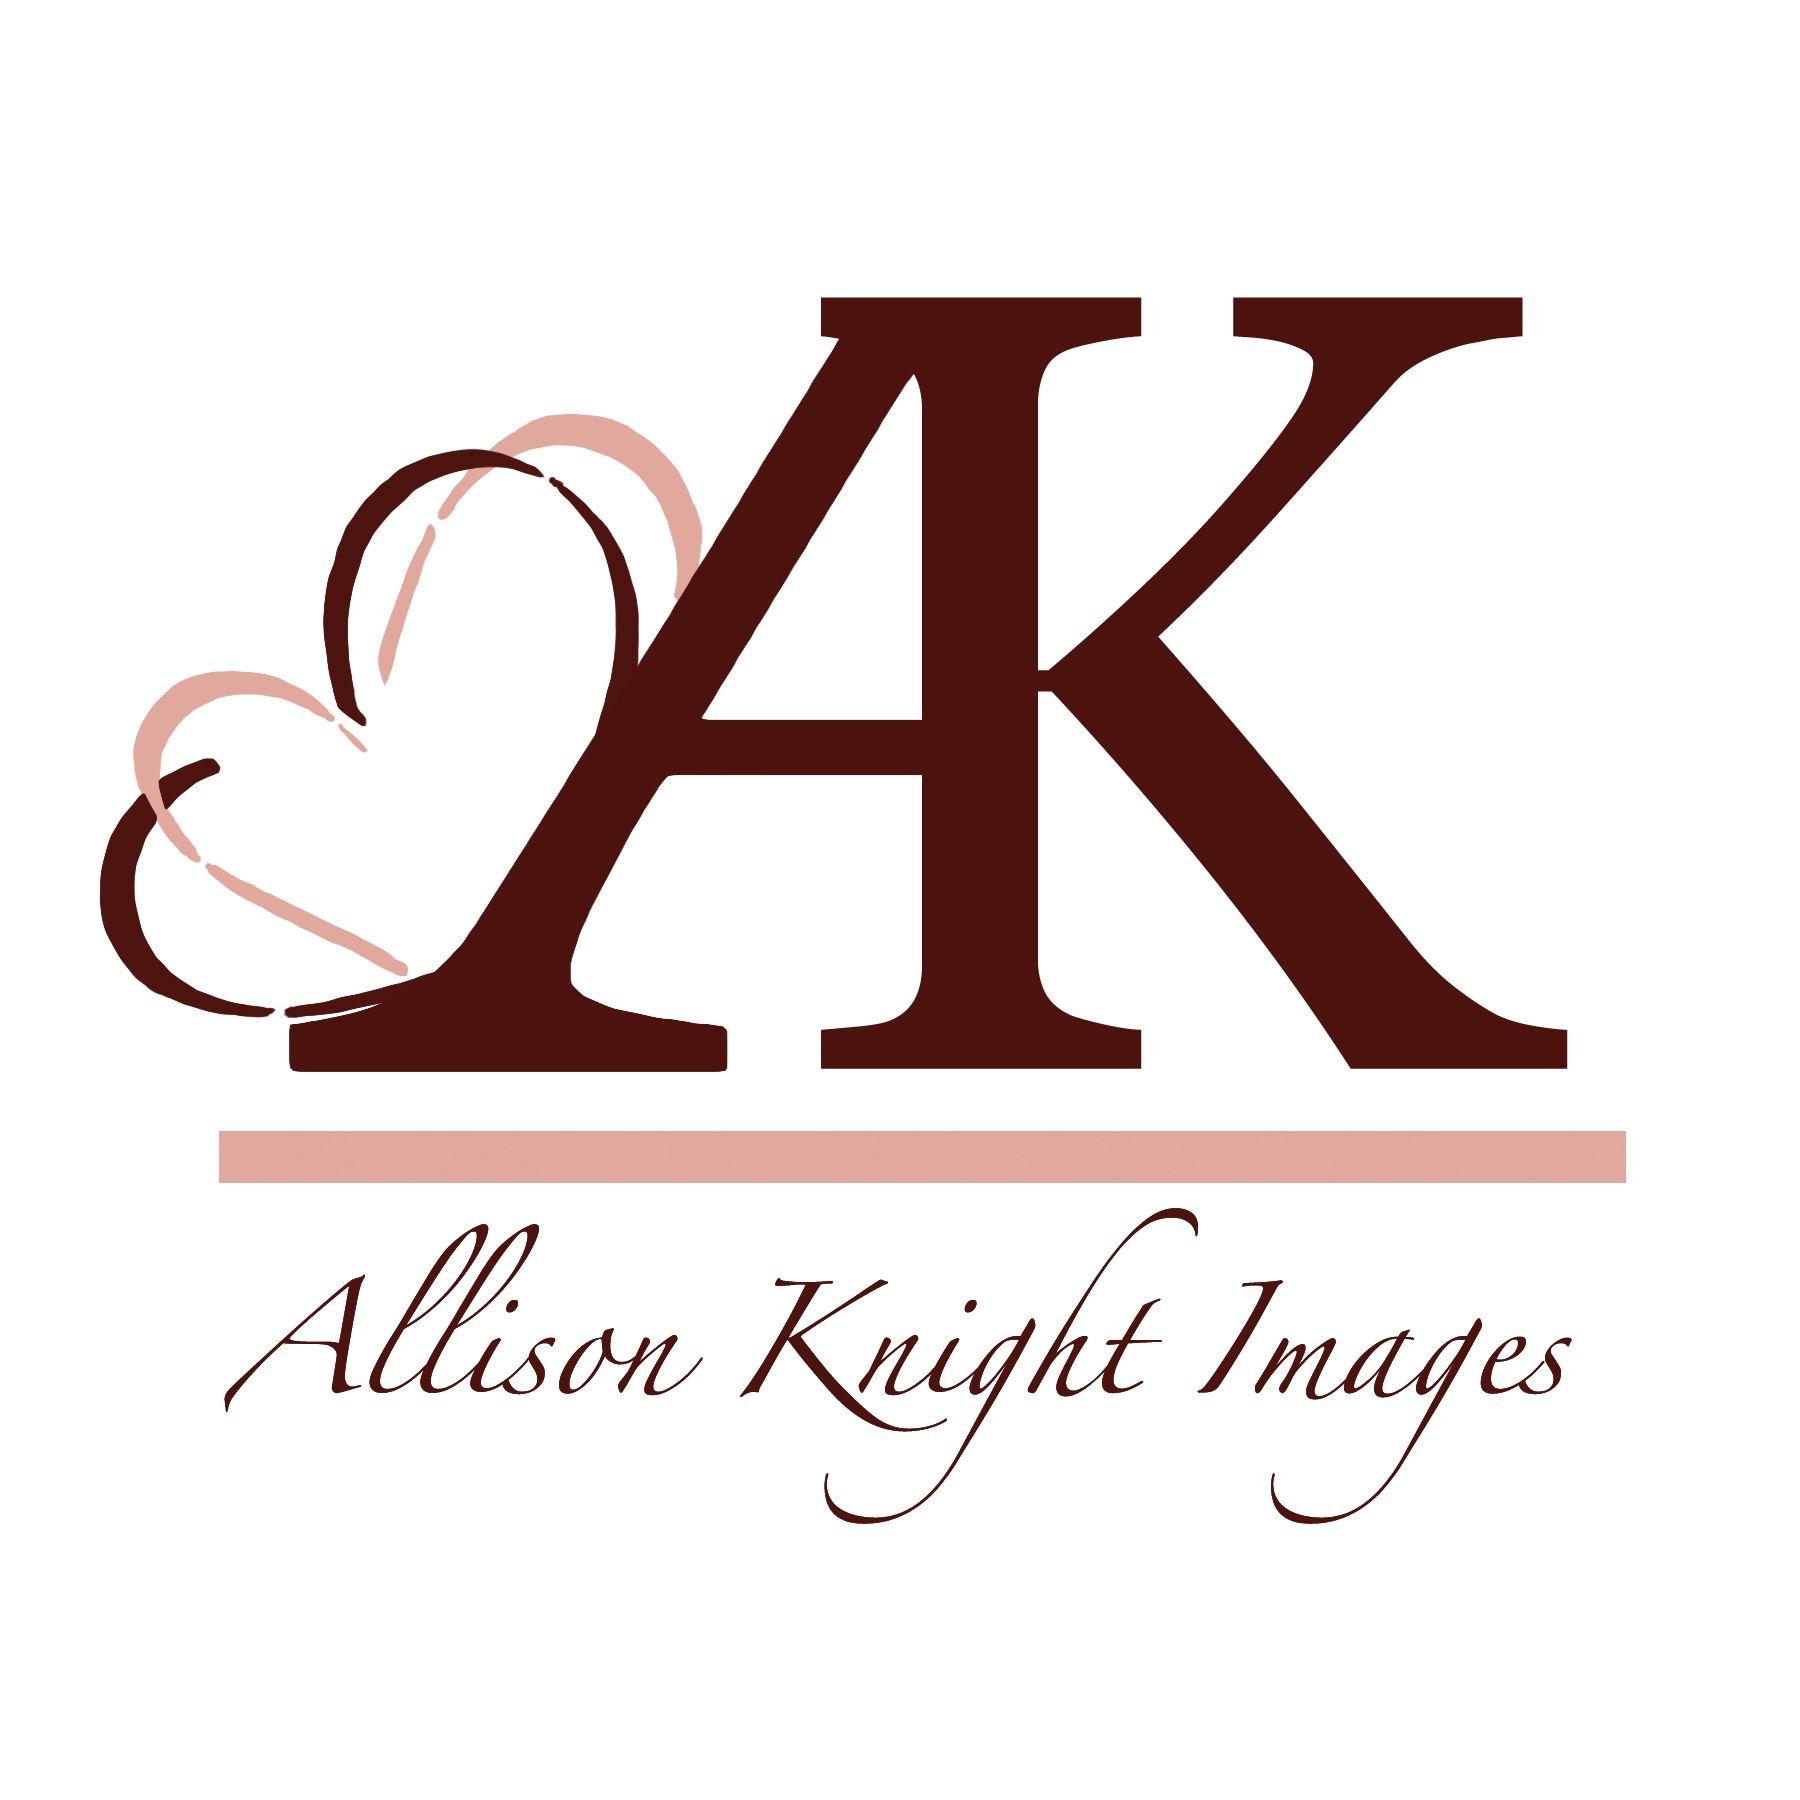 Word New Logo - Introducing My New Logo. Allison Knight Image